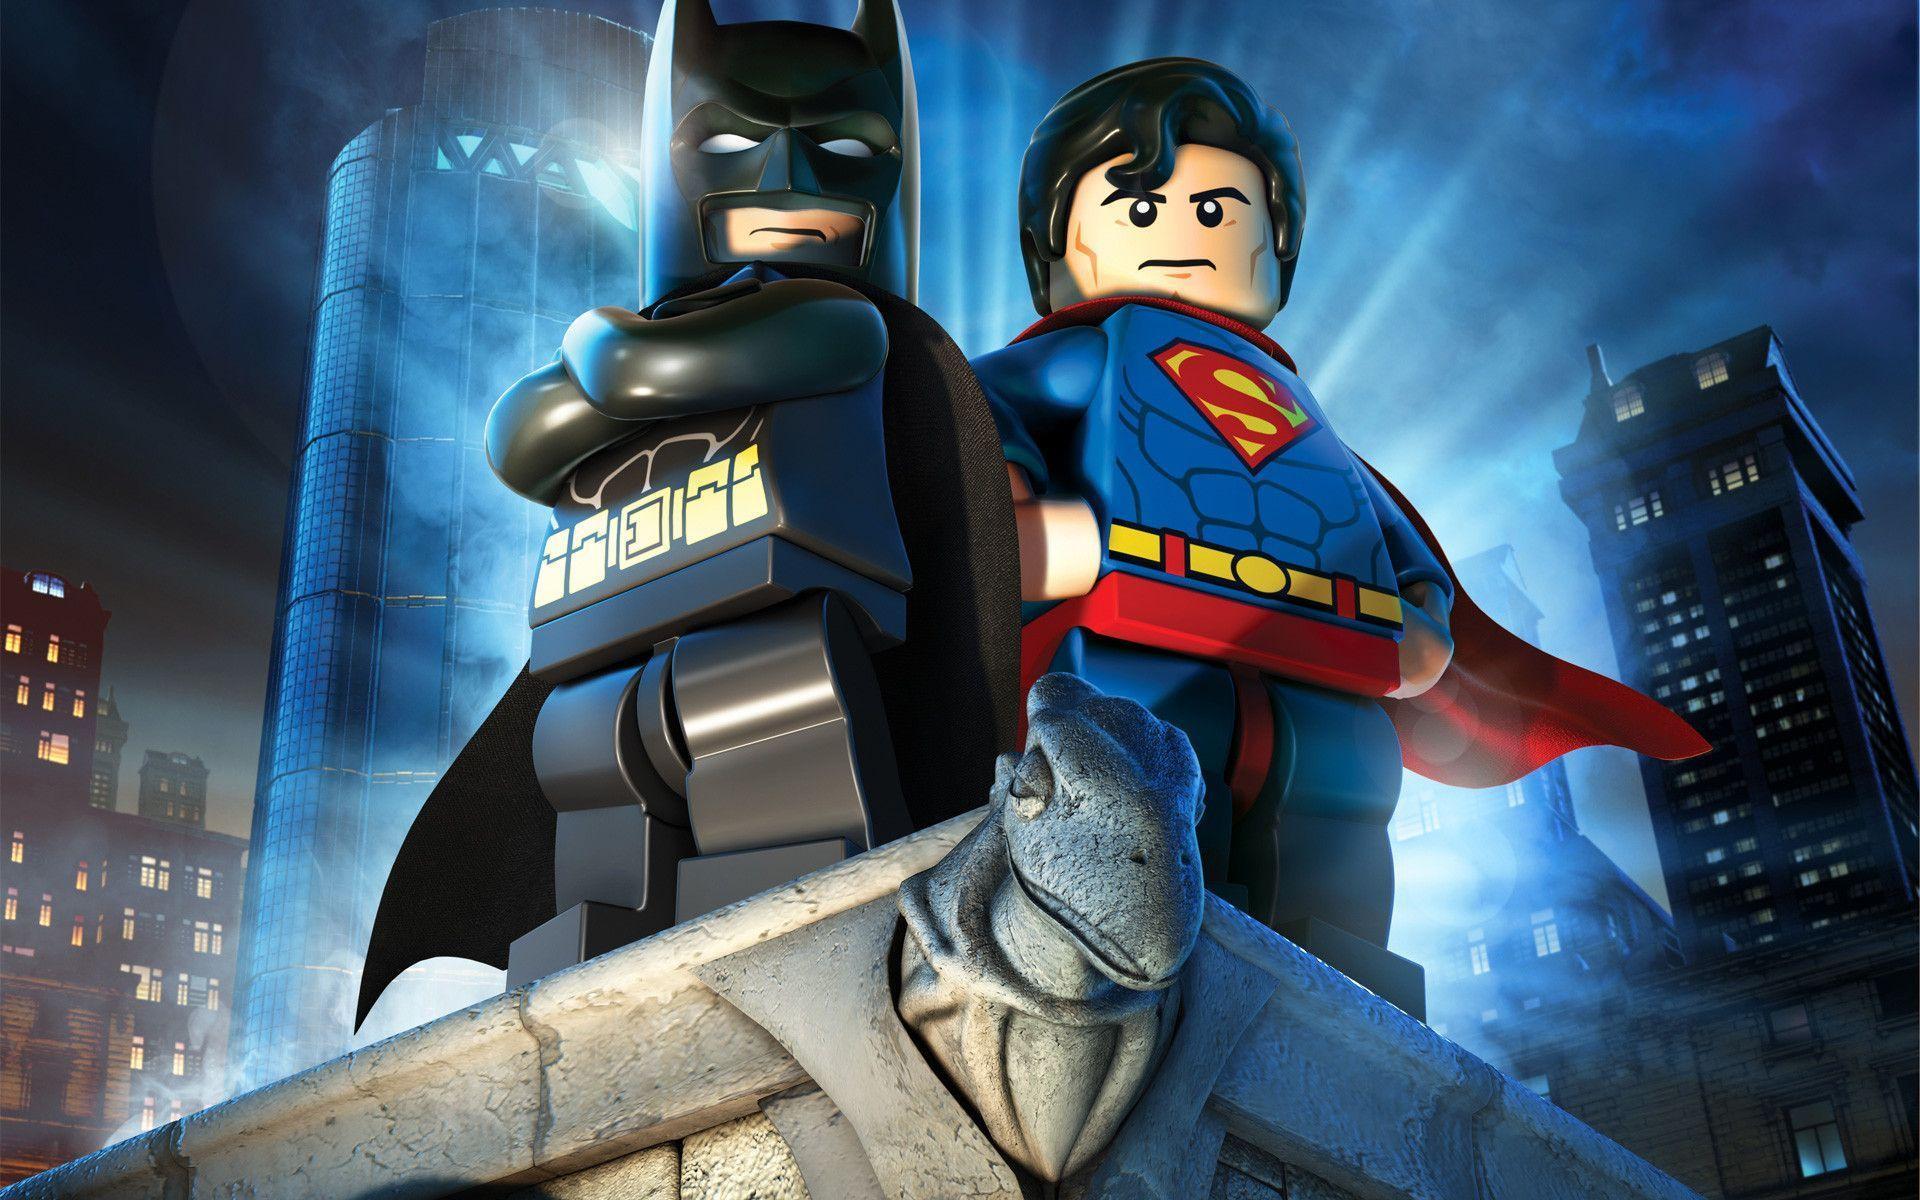 Free Lego Batman 2: DC Super Heroes Wallpaper in 1920x1200